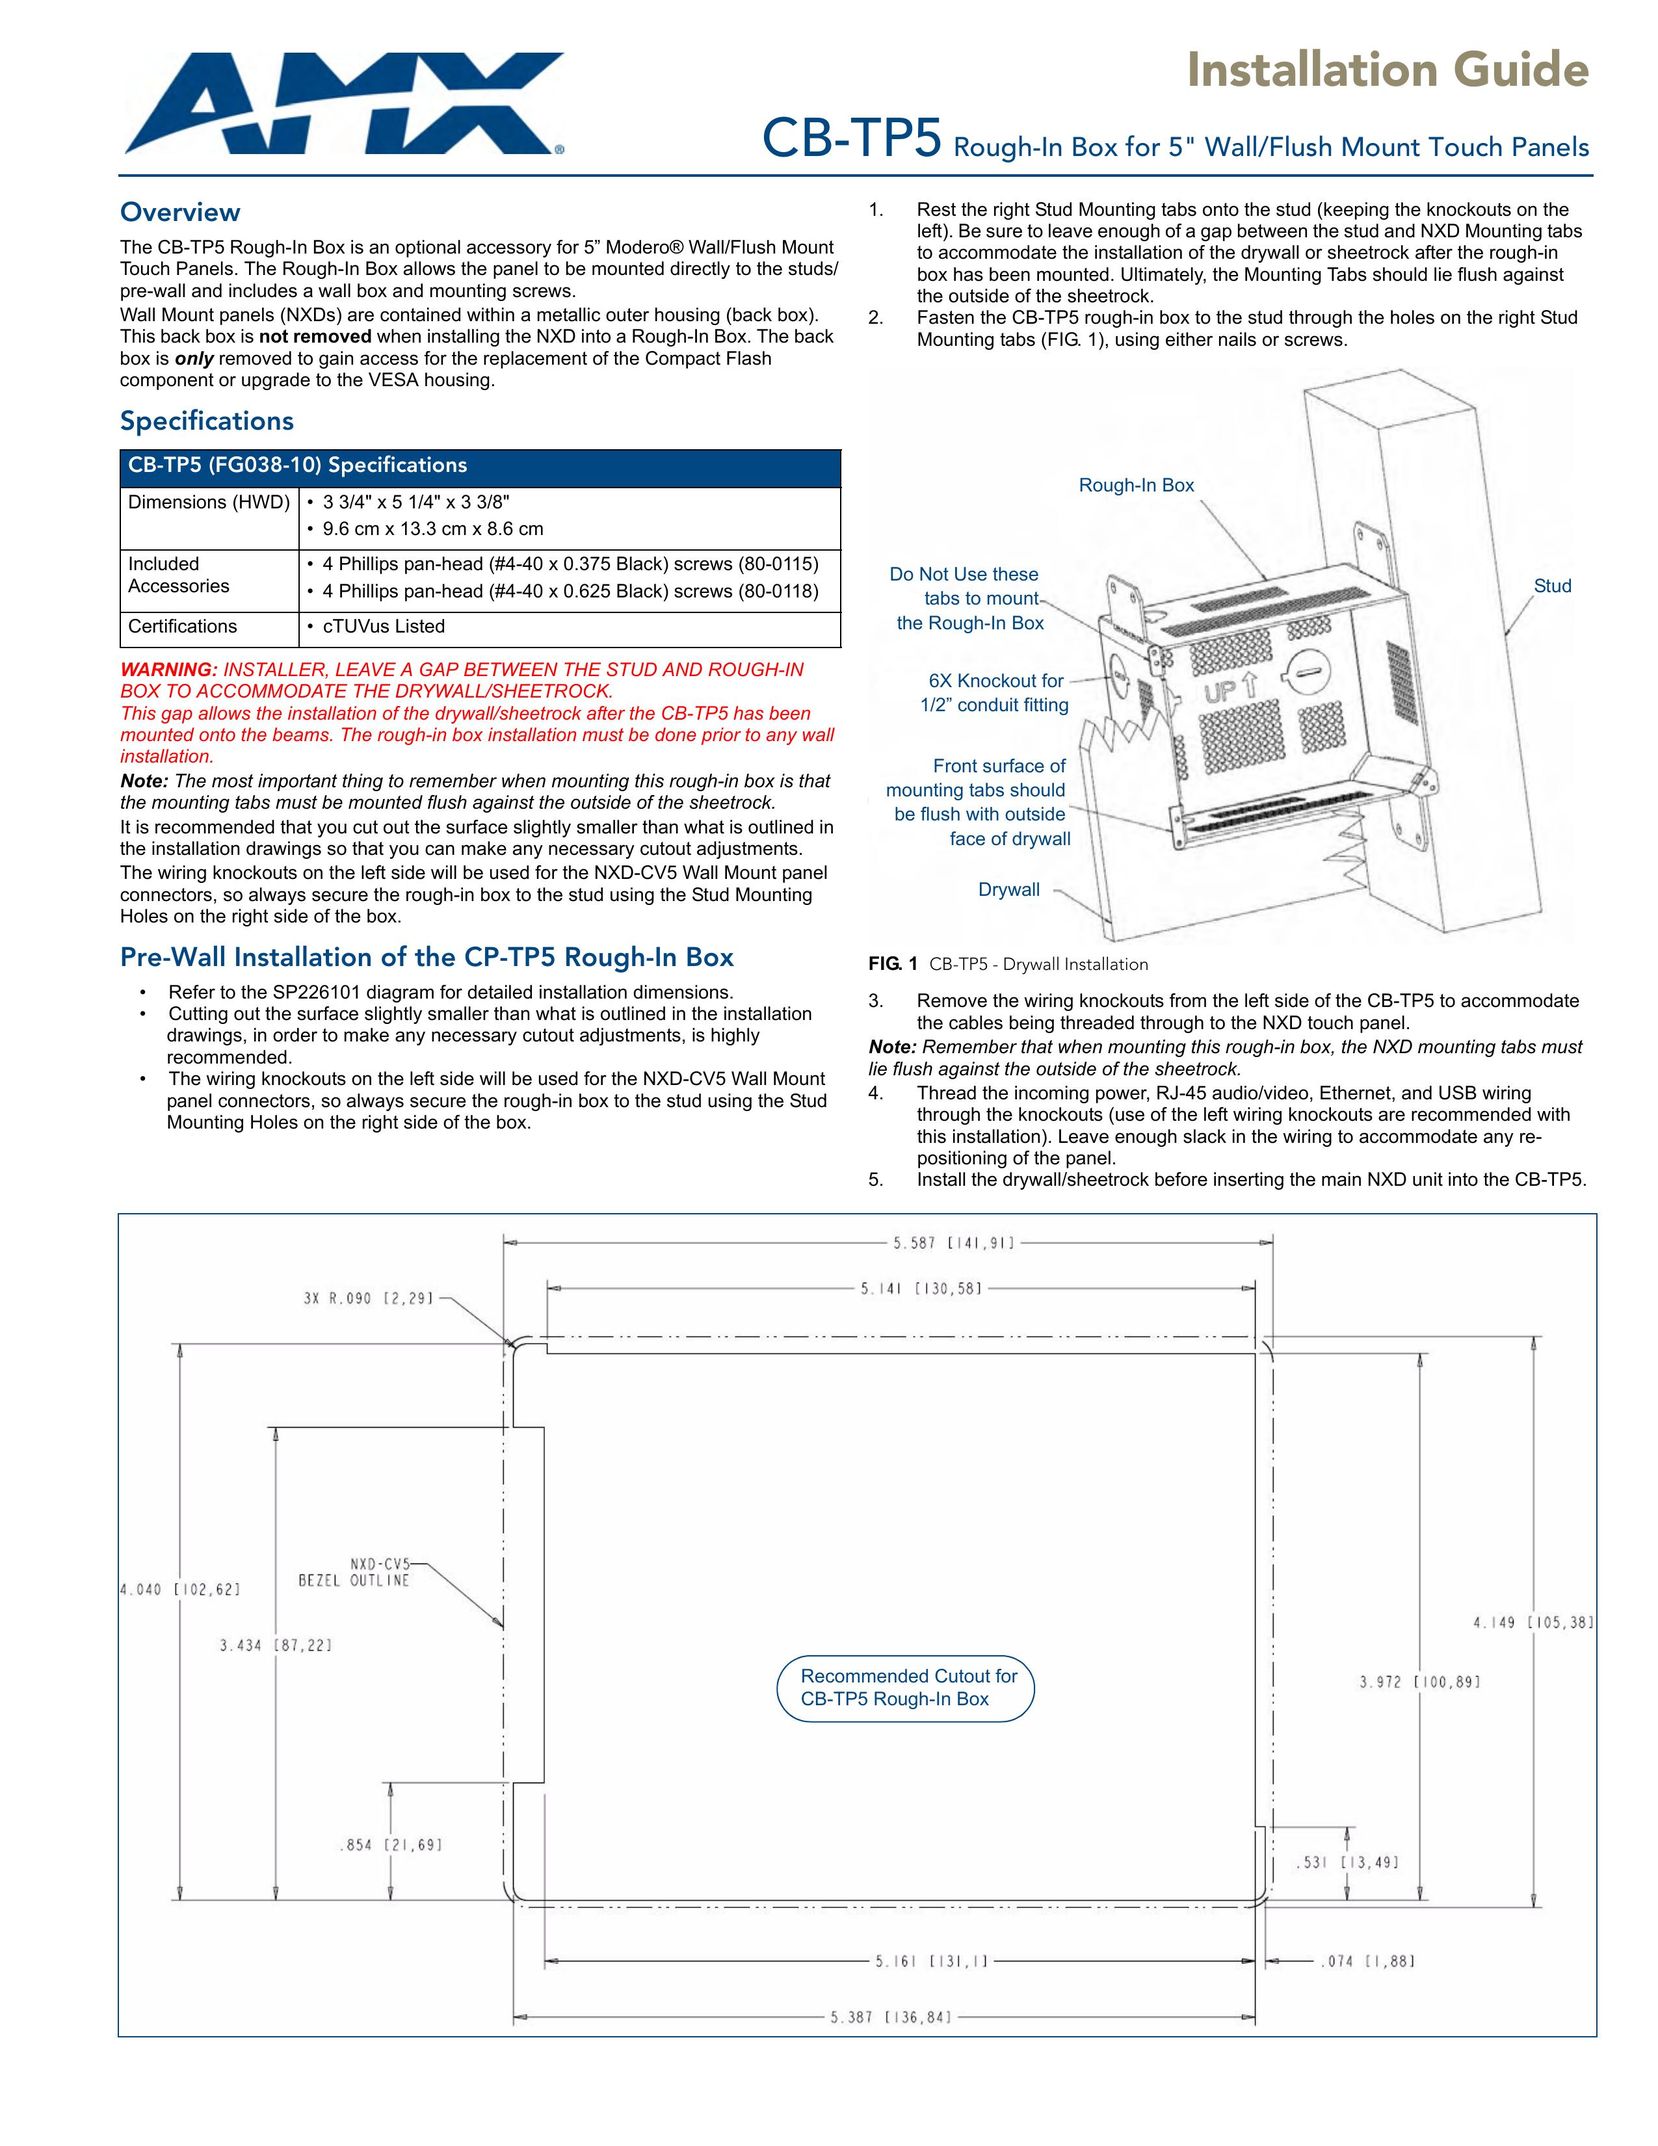 AMX CB-TP5 Indoor Furnishings User Manual